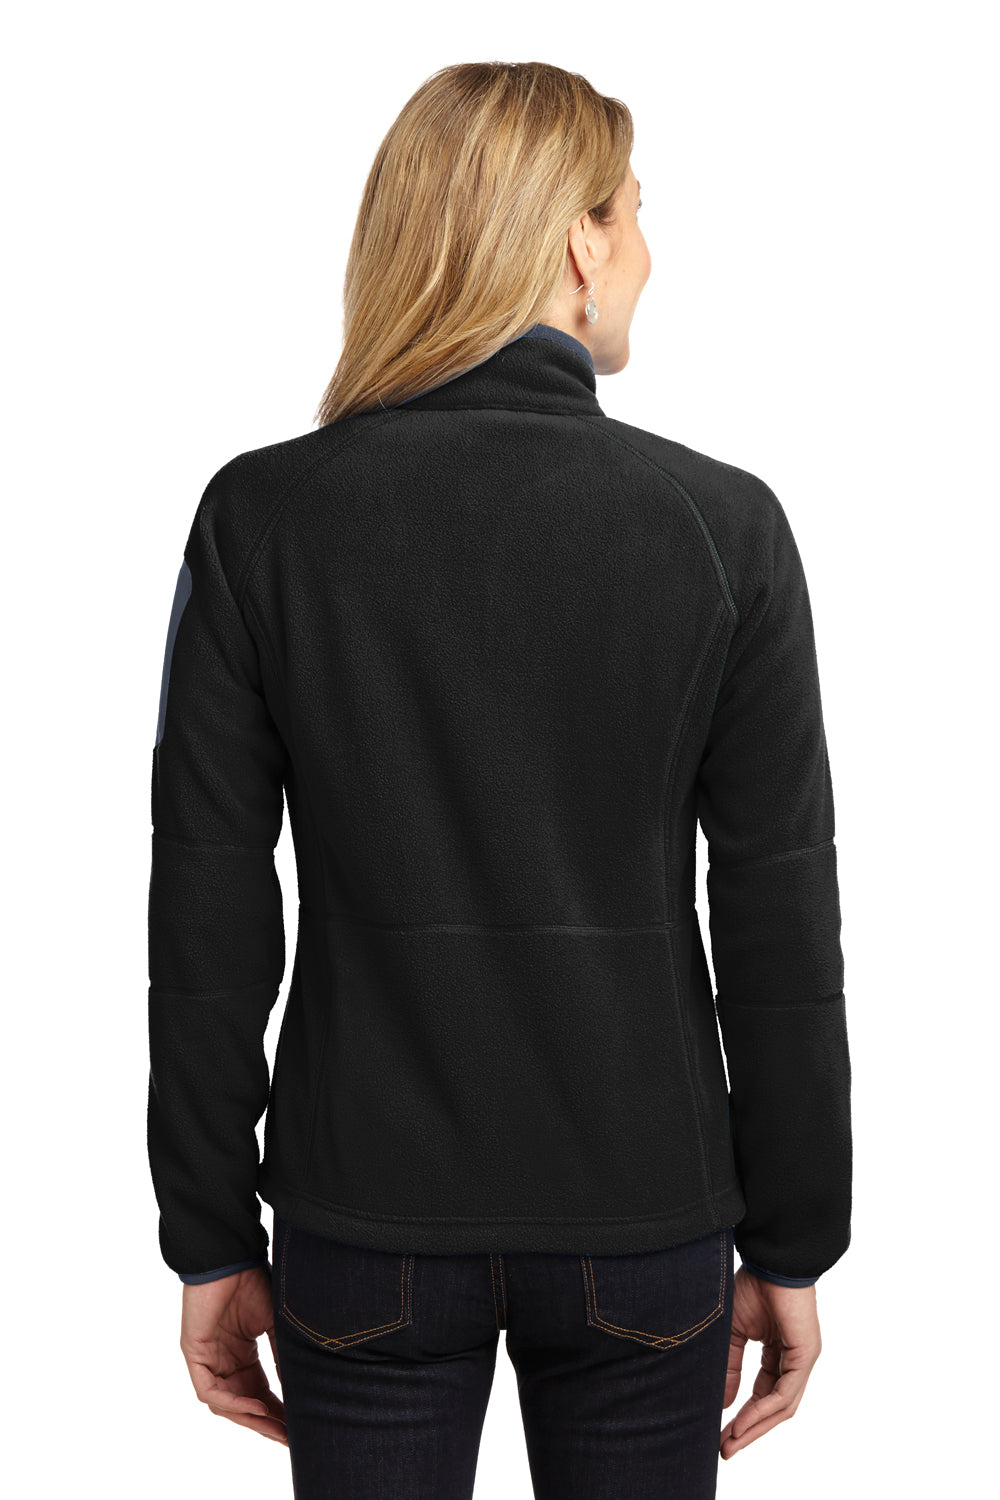 Port Authority L229 Womens Full Zip Fleece Jacket Black/Grey Back